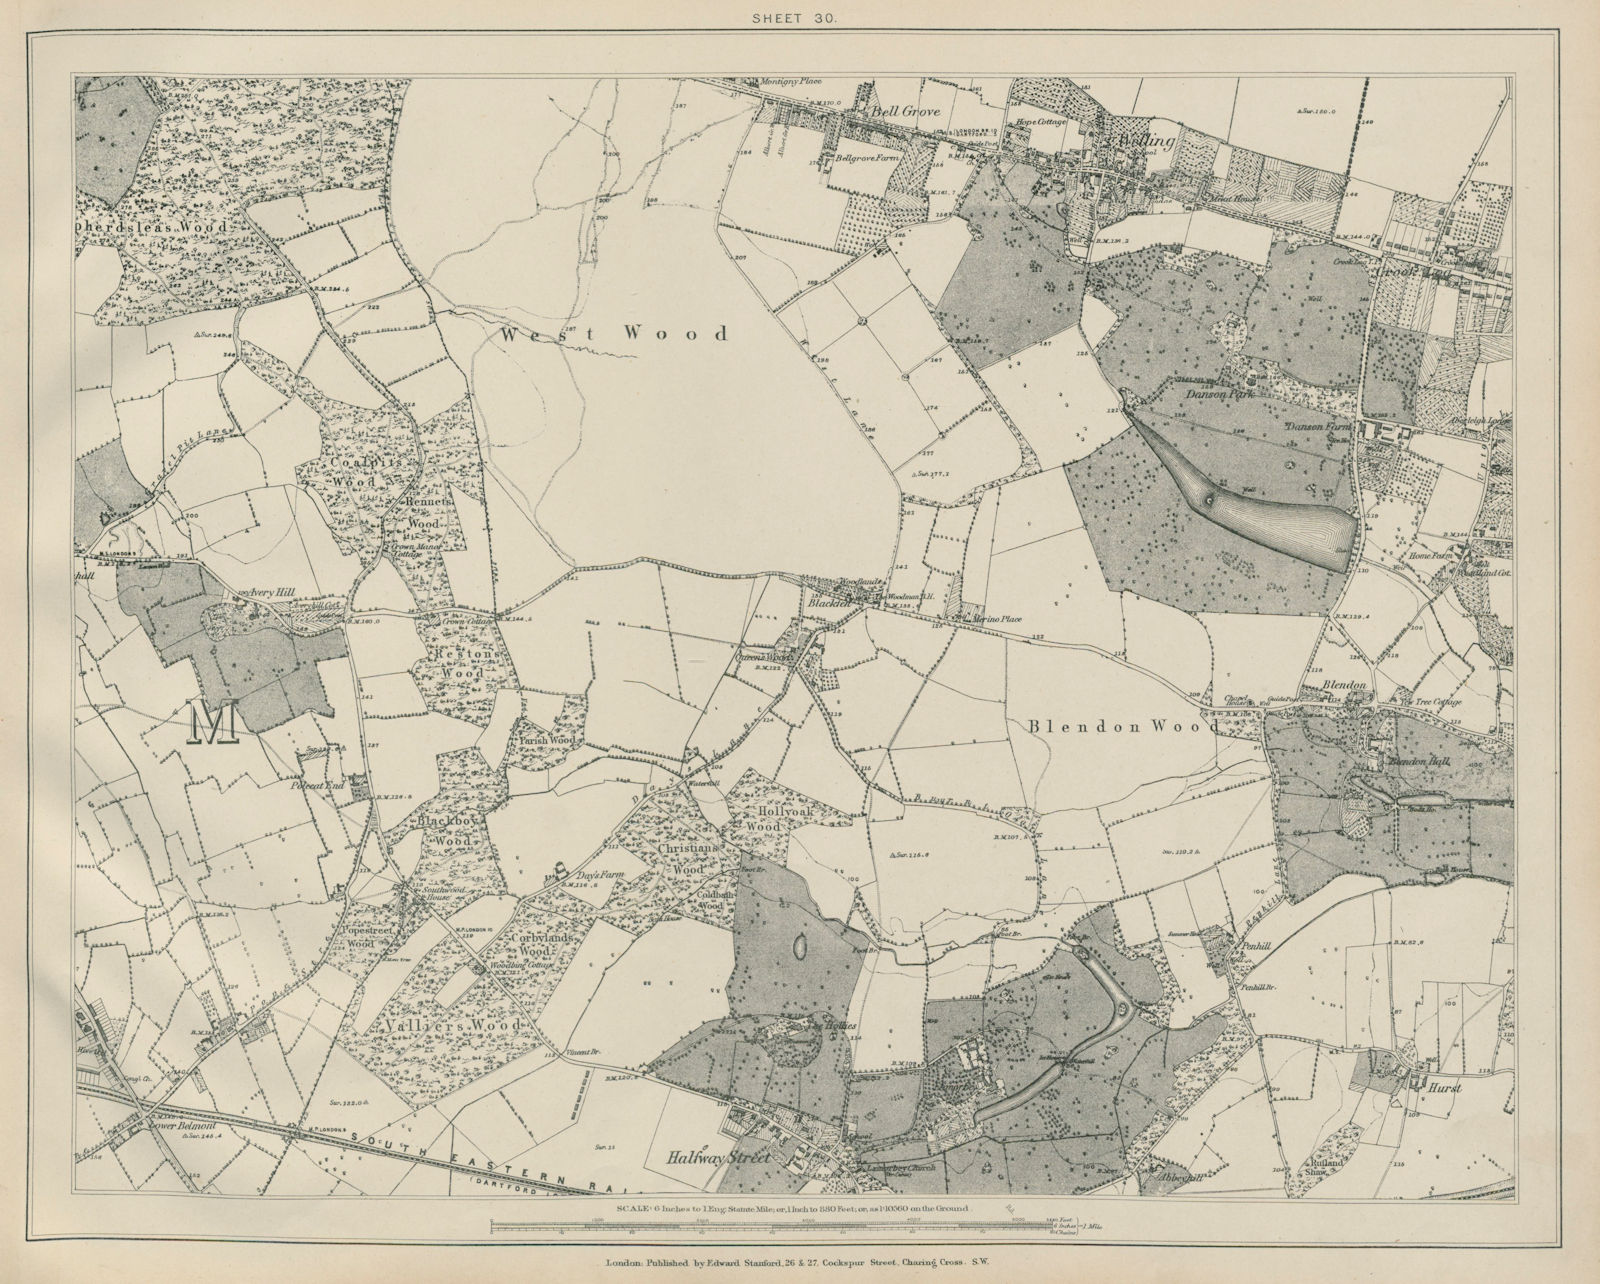 Associate Product Stanford Library map of London Sheet 30 West Wood Blendon Wood Blackfen 1895